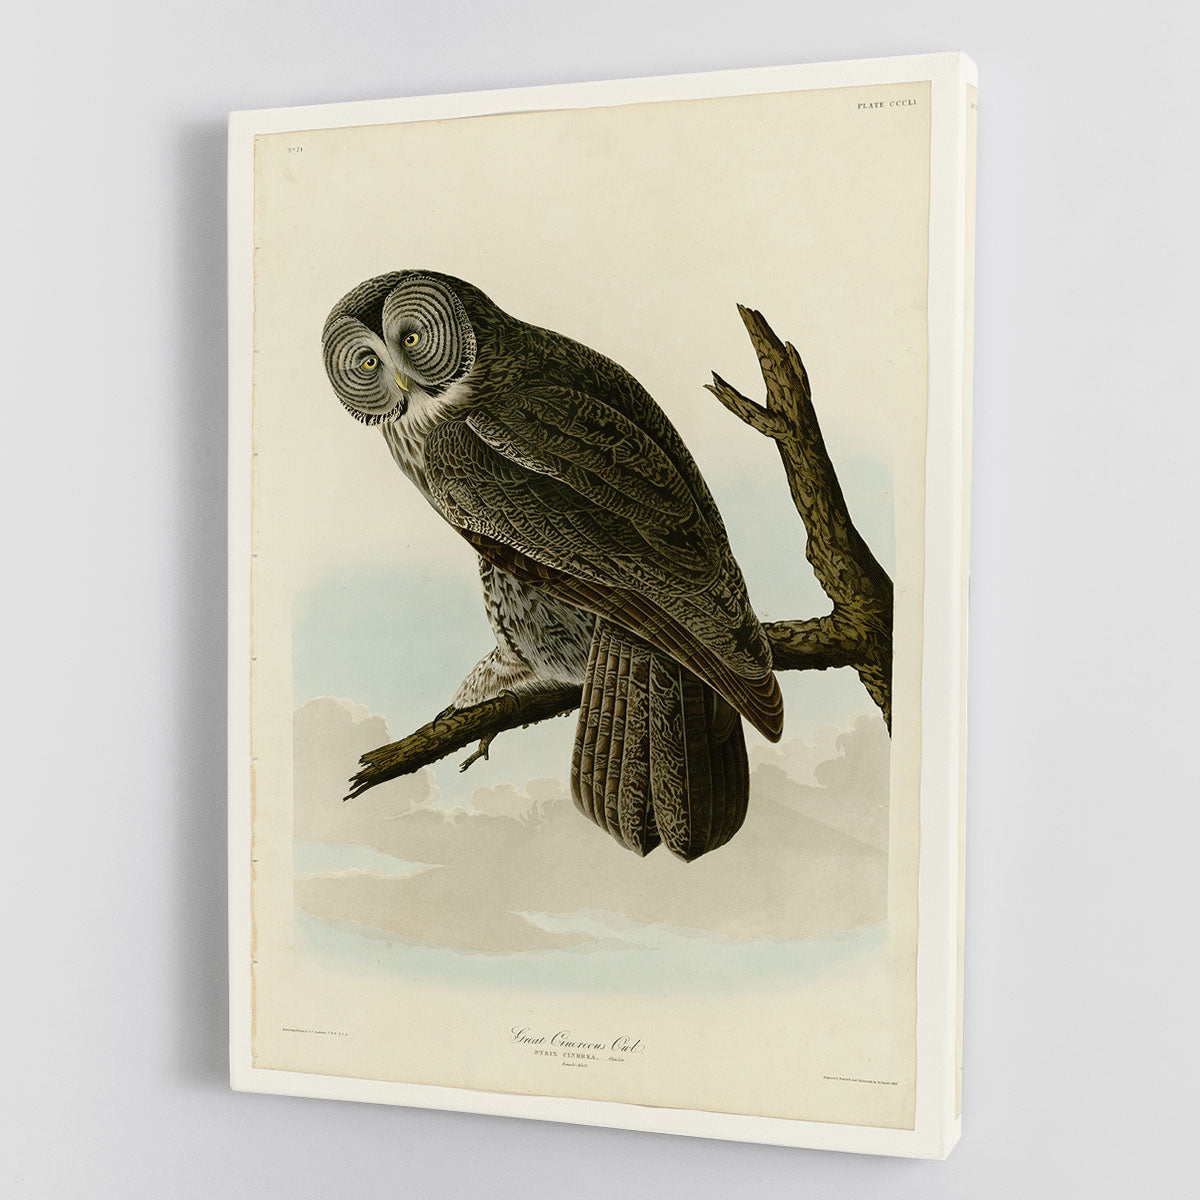 Great Cinereous Owl by Audubon Canvas Print or Poster - Canvas Art Rocks - 1